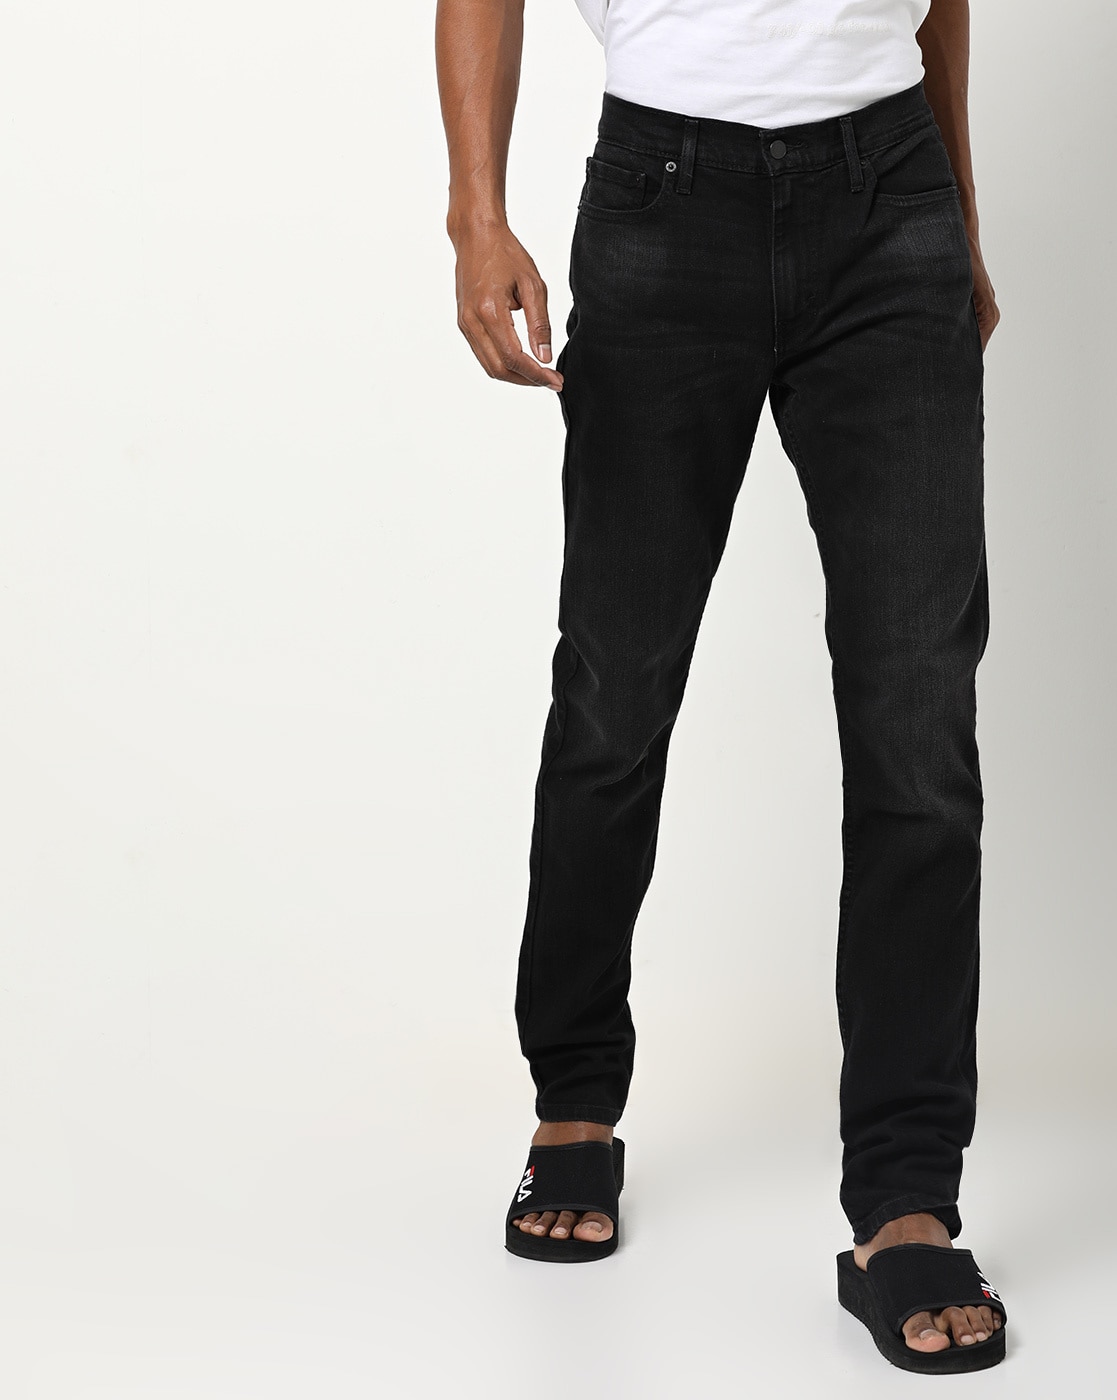 levis black jeans for men